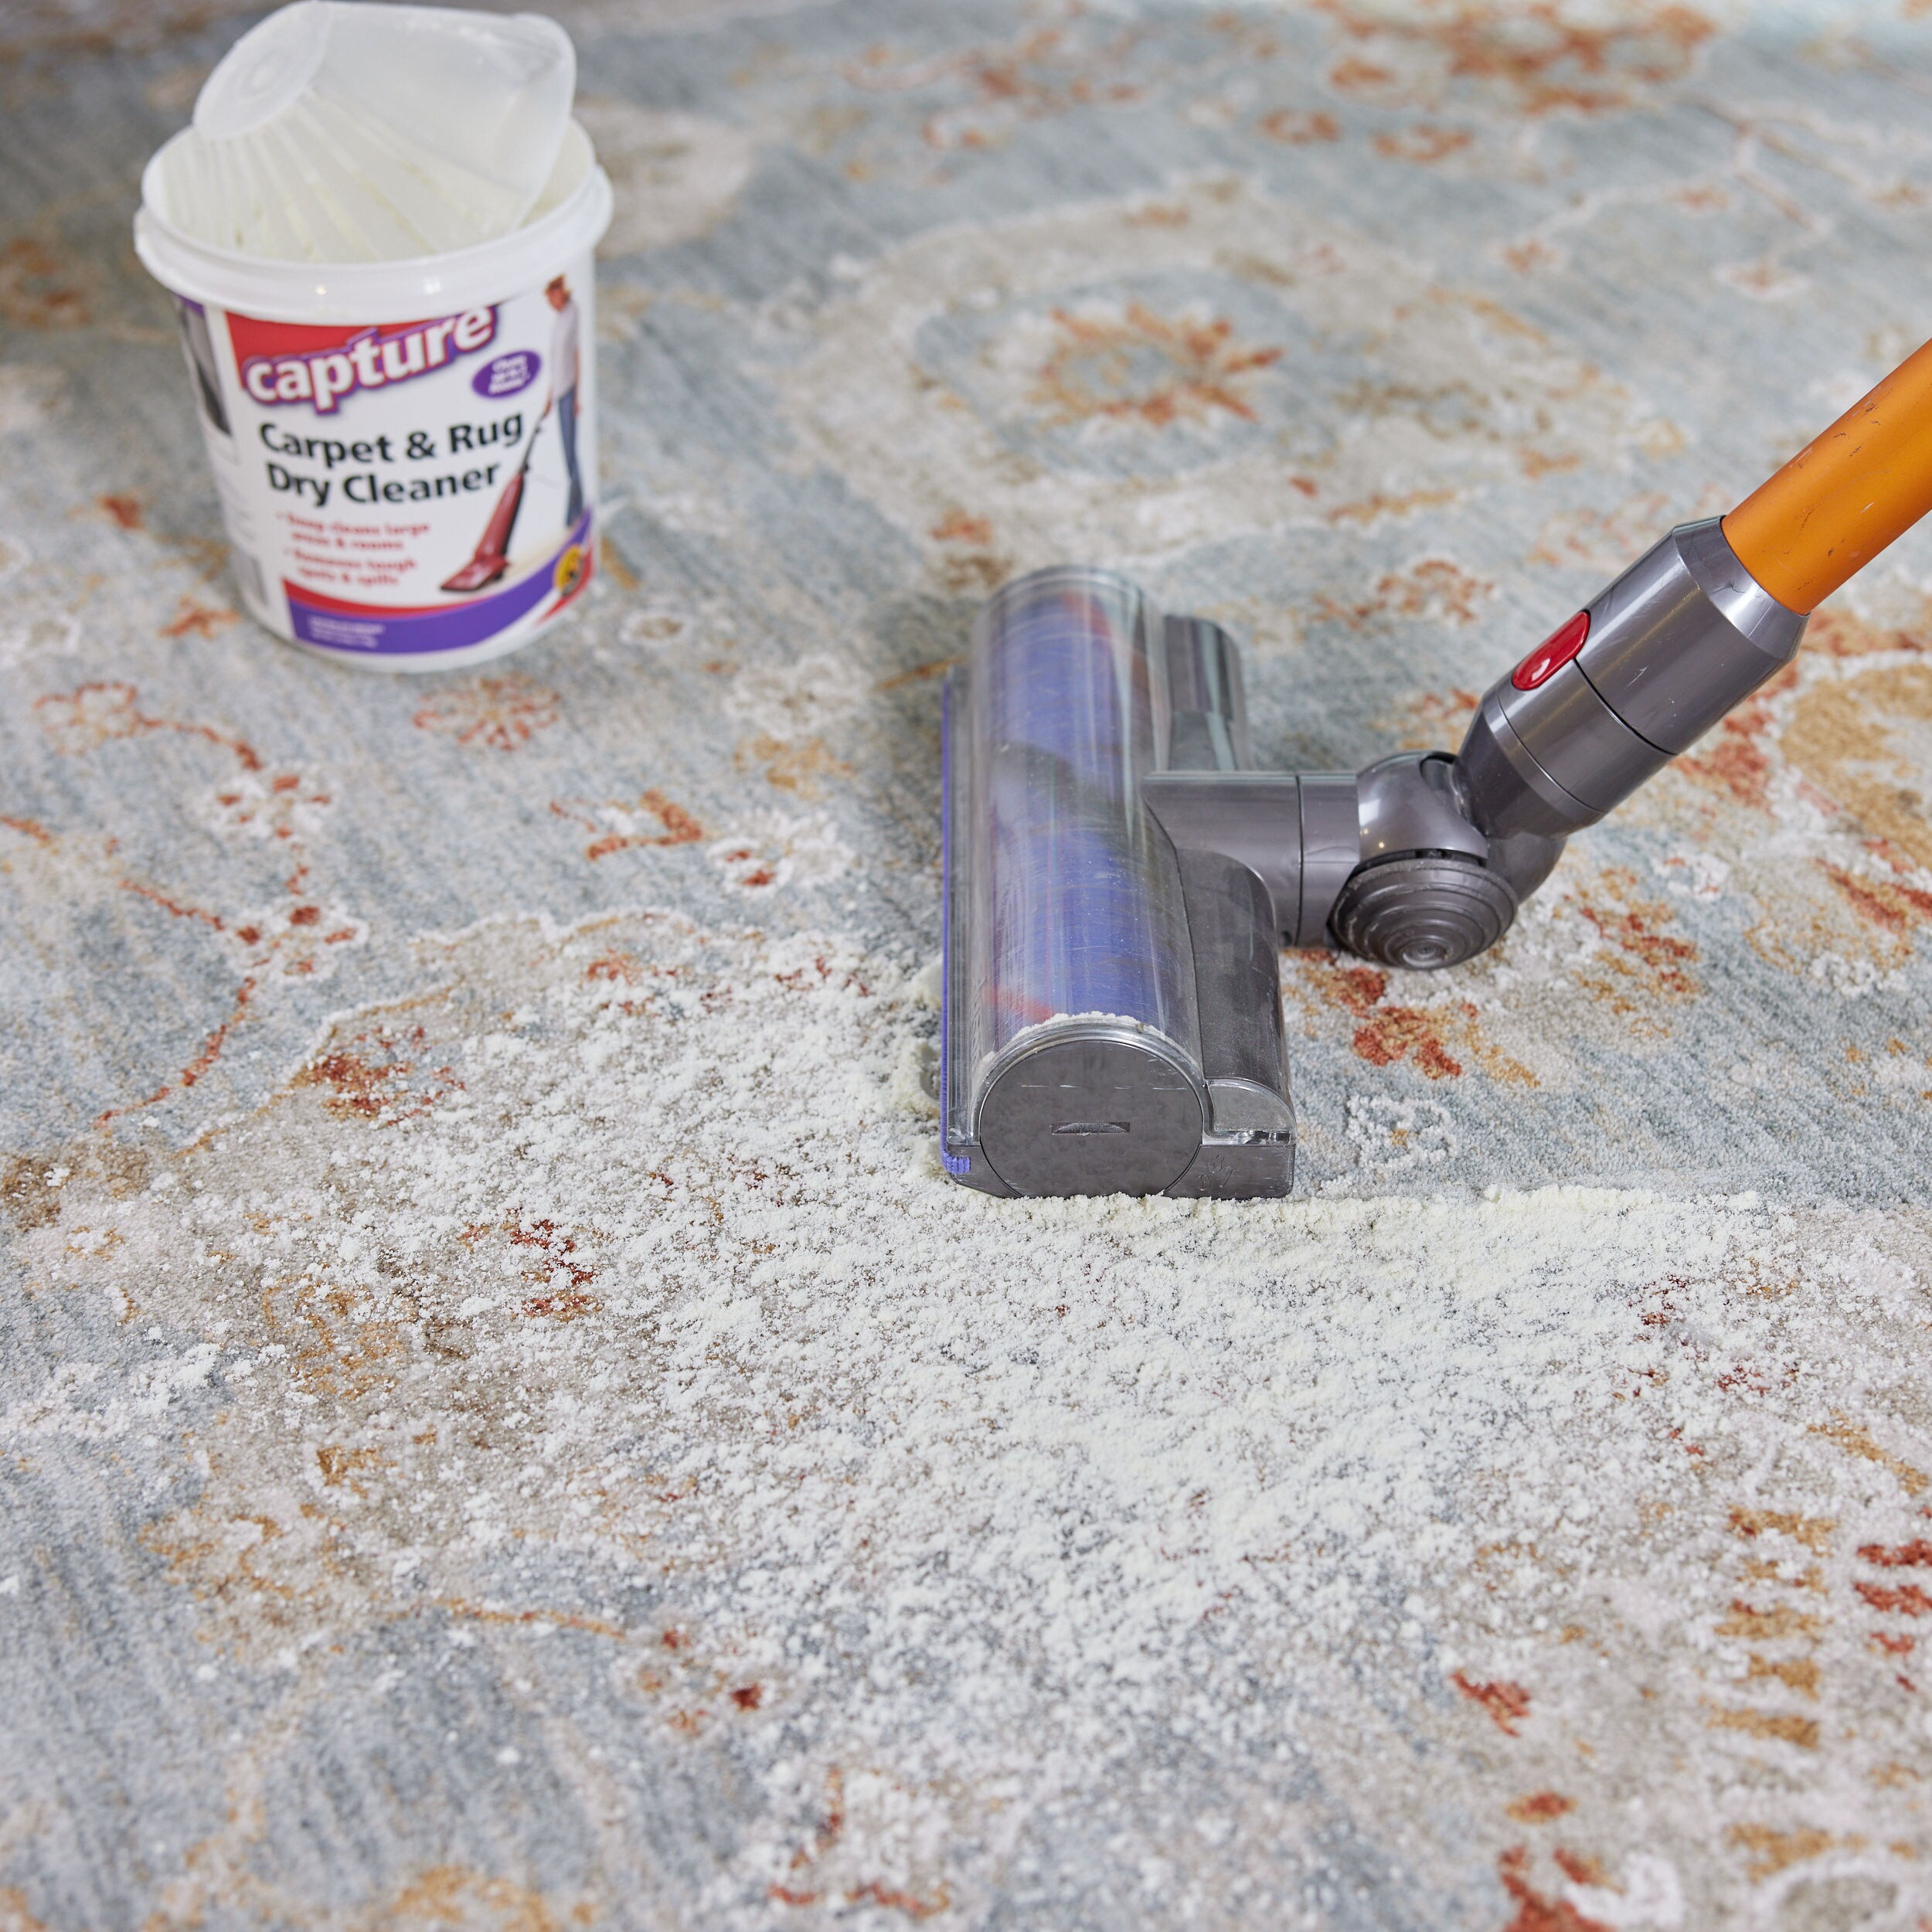 Capture Carpet Dry Cleaner Powder and Brush